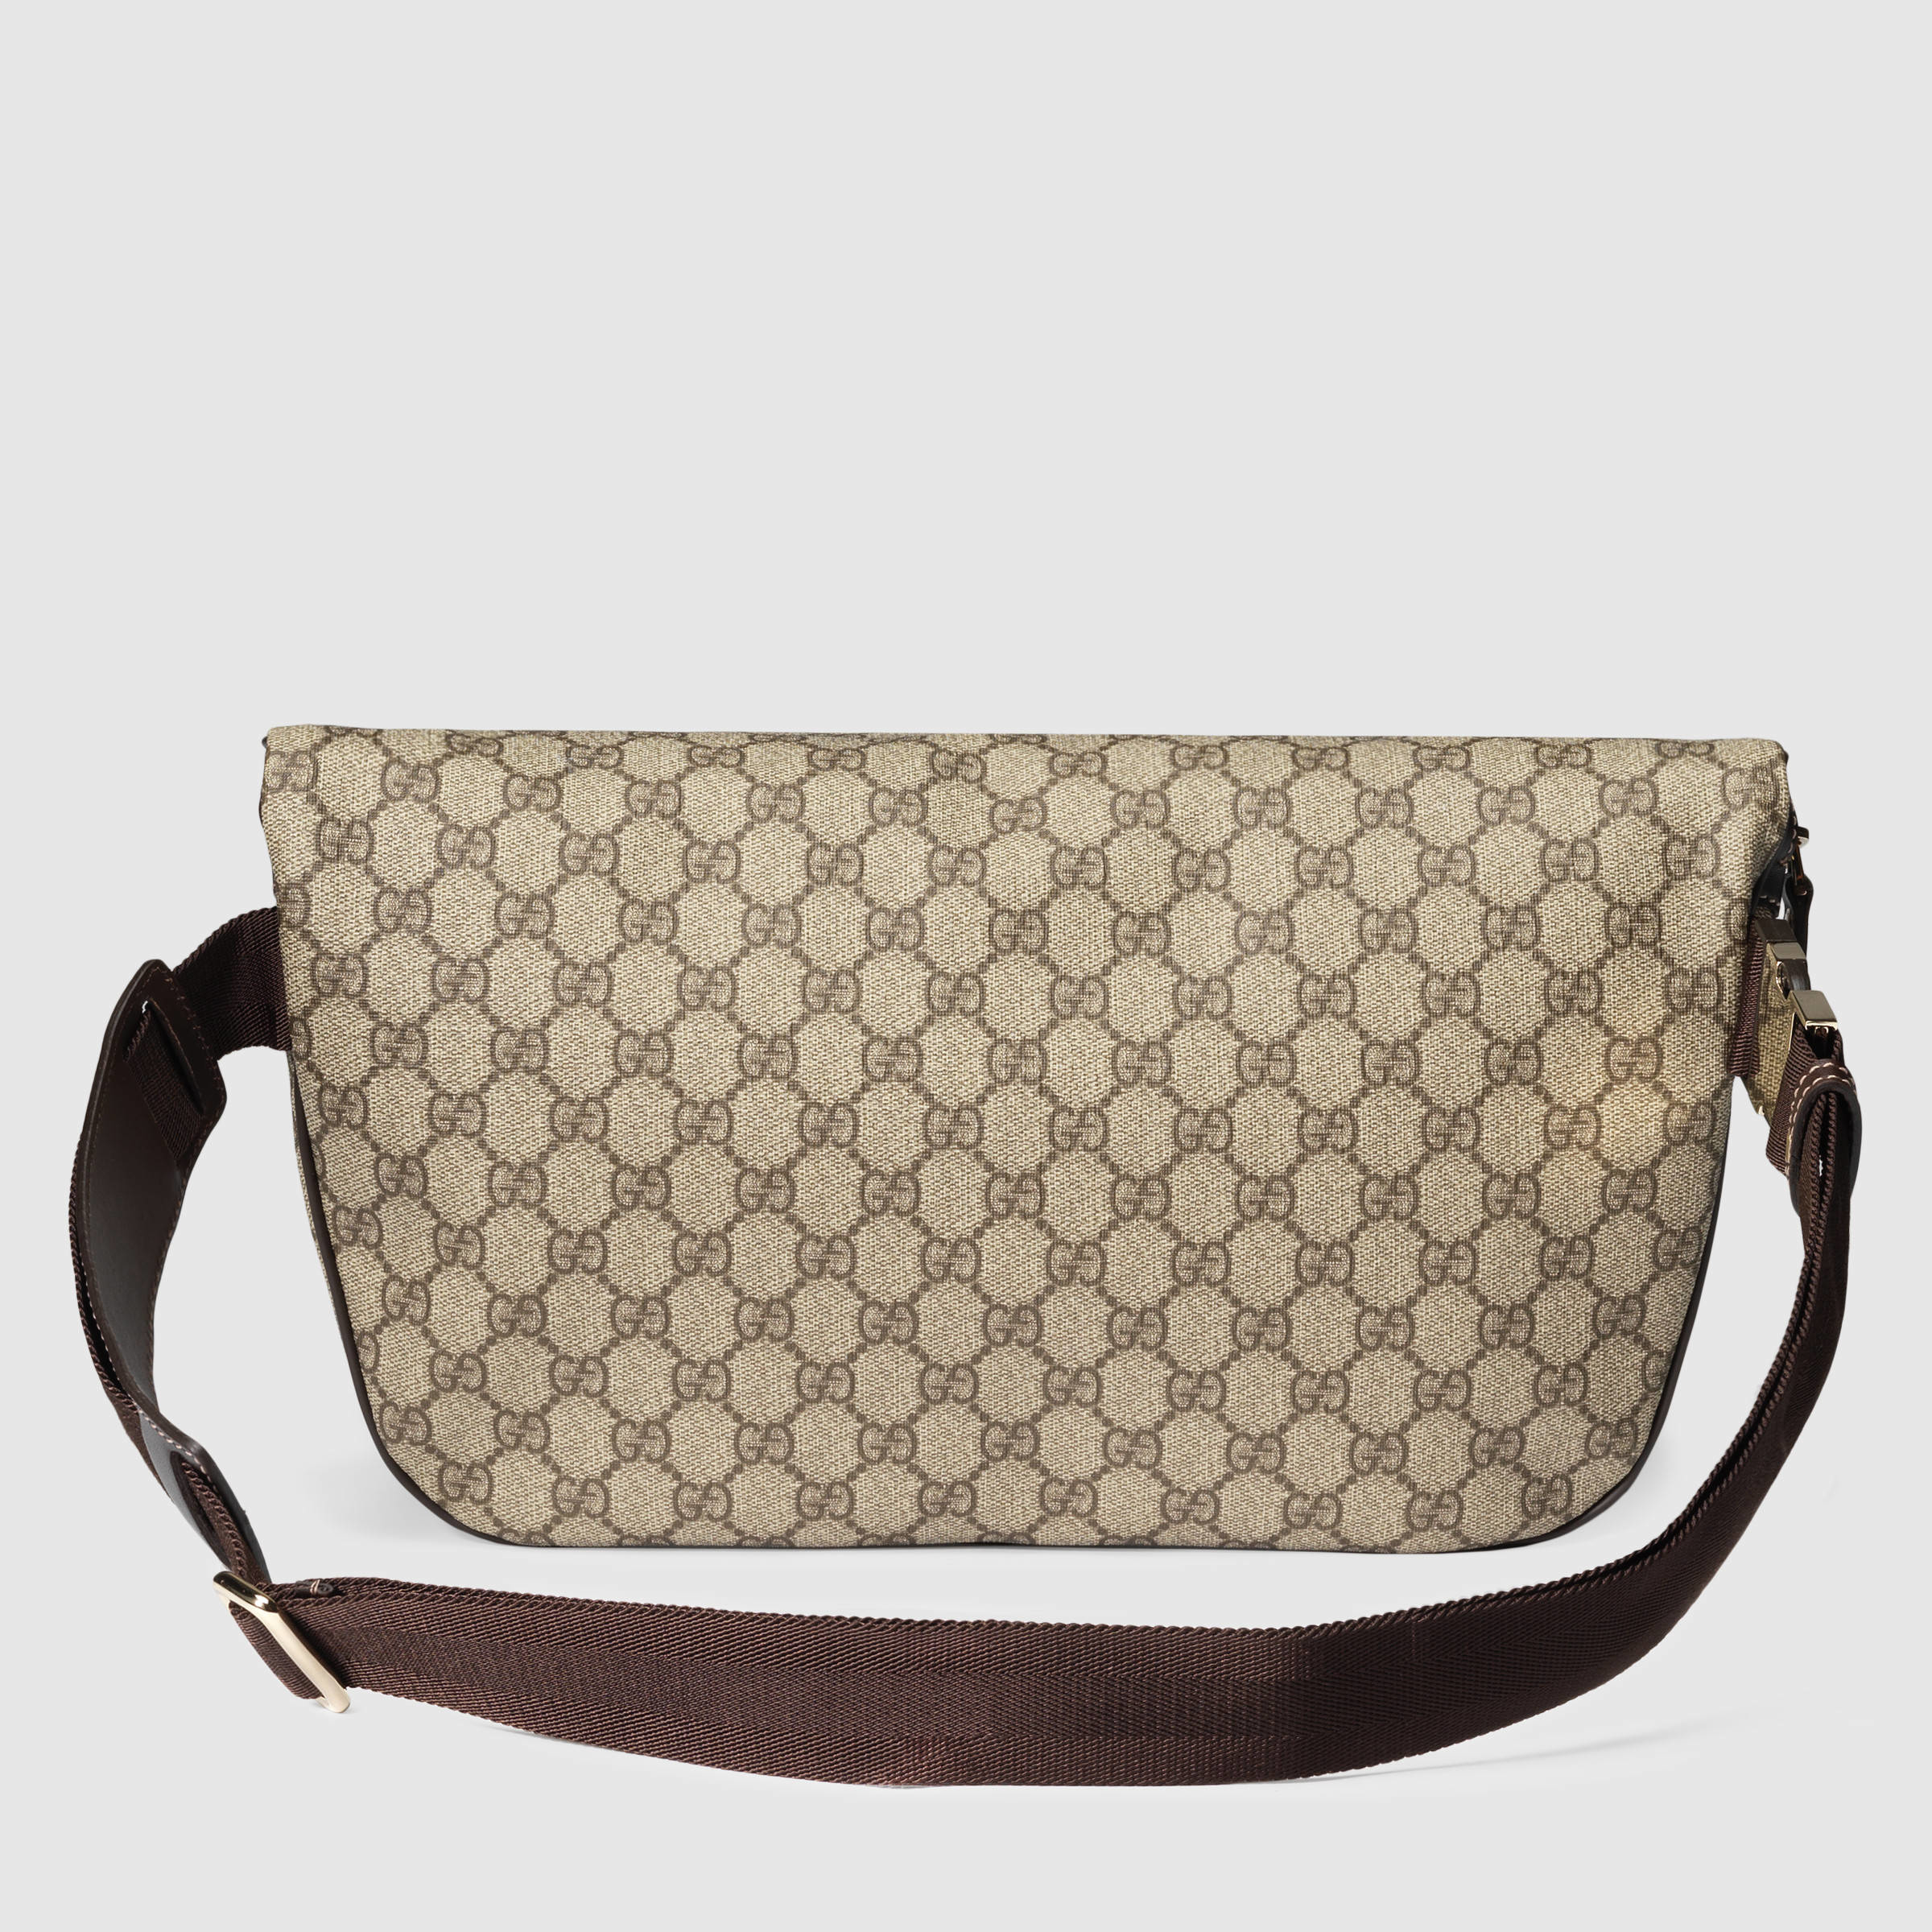 Lyst - Gucci Gg Supreme Canvas Belt Bag in Brown for Men